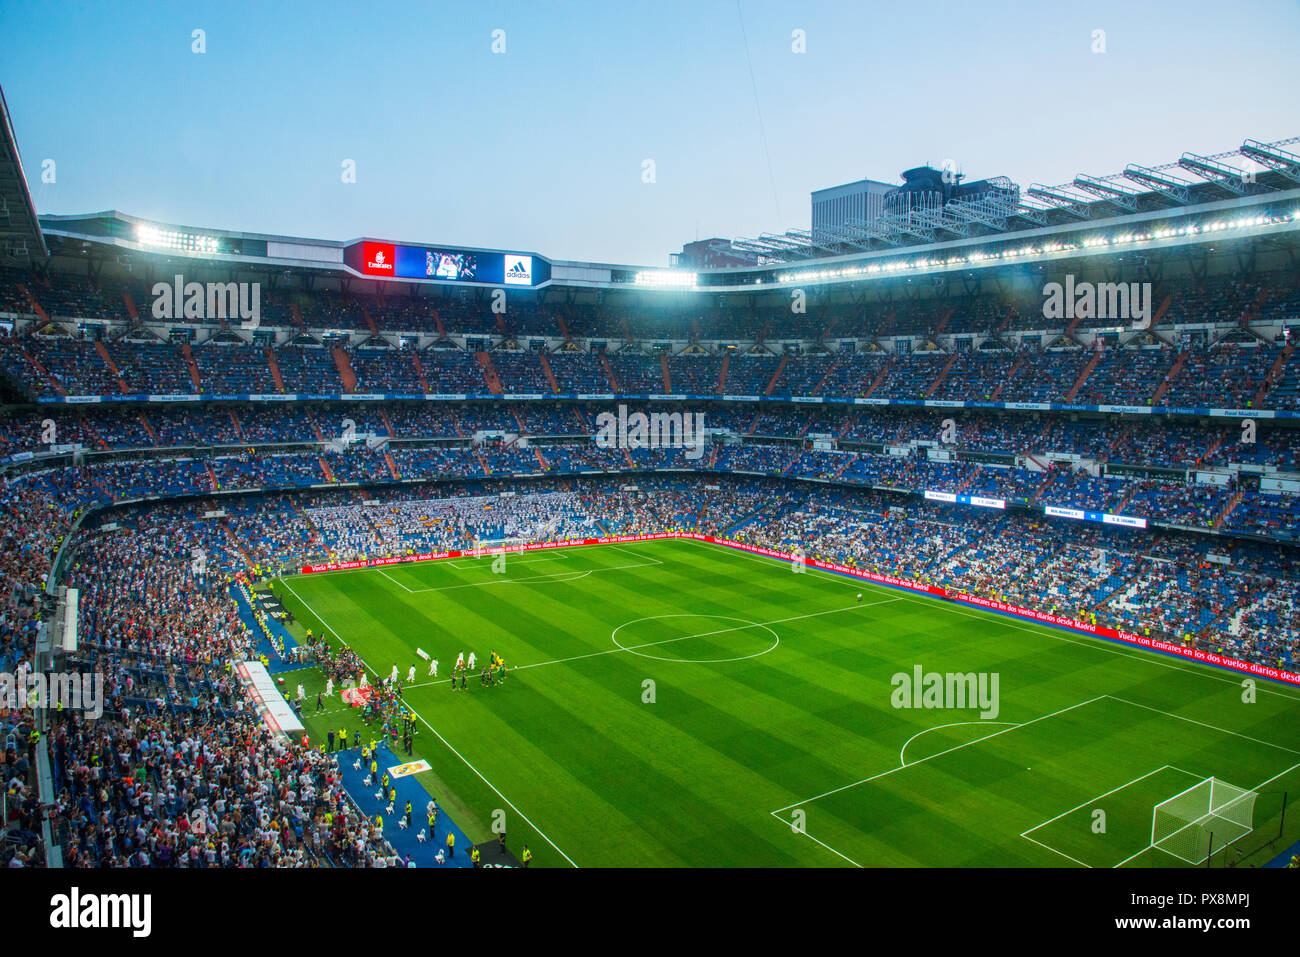 Football match, footballers going into the field. Santiago Bernabeu stadium, Madrid, Spain. Stock Photo